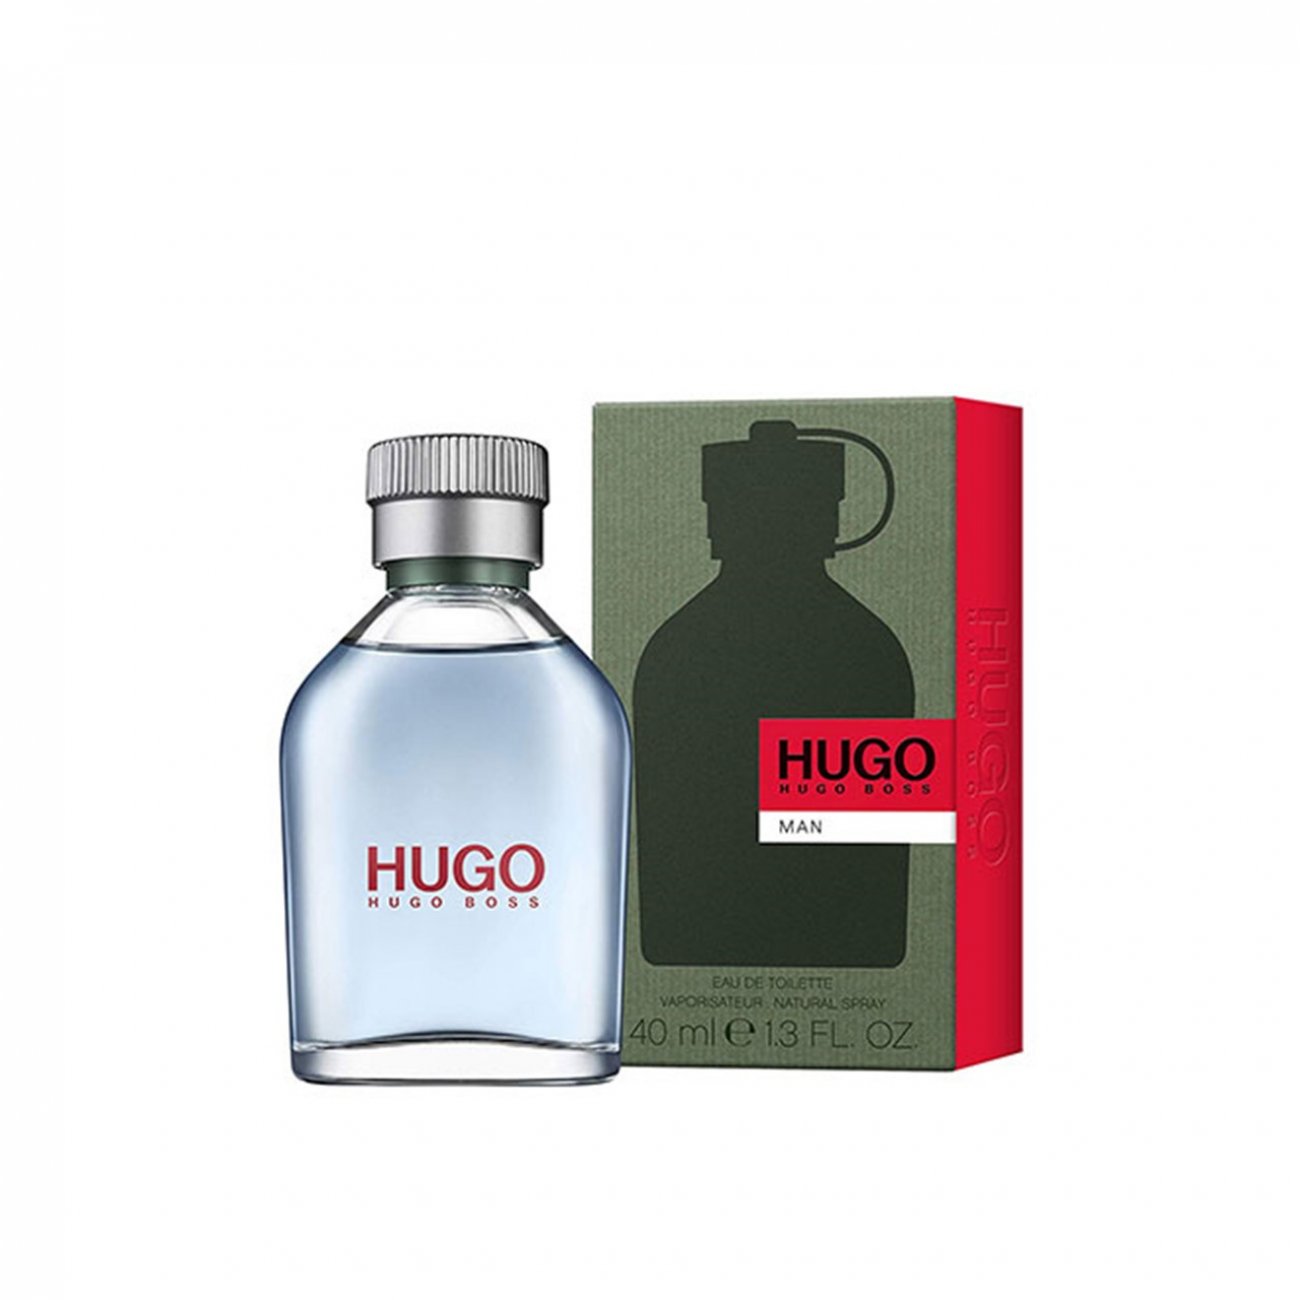 Buy Hugo Boss Hugo Man Eau Toilette 75ml (2.5fl oz) · USA